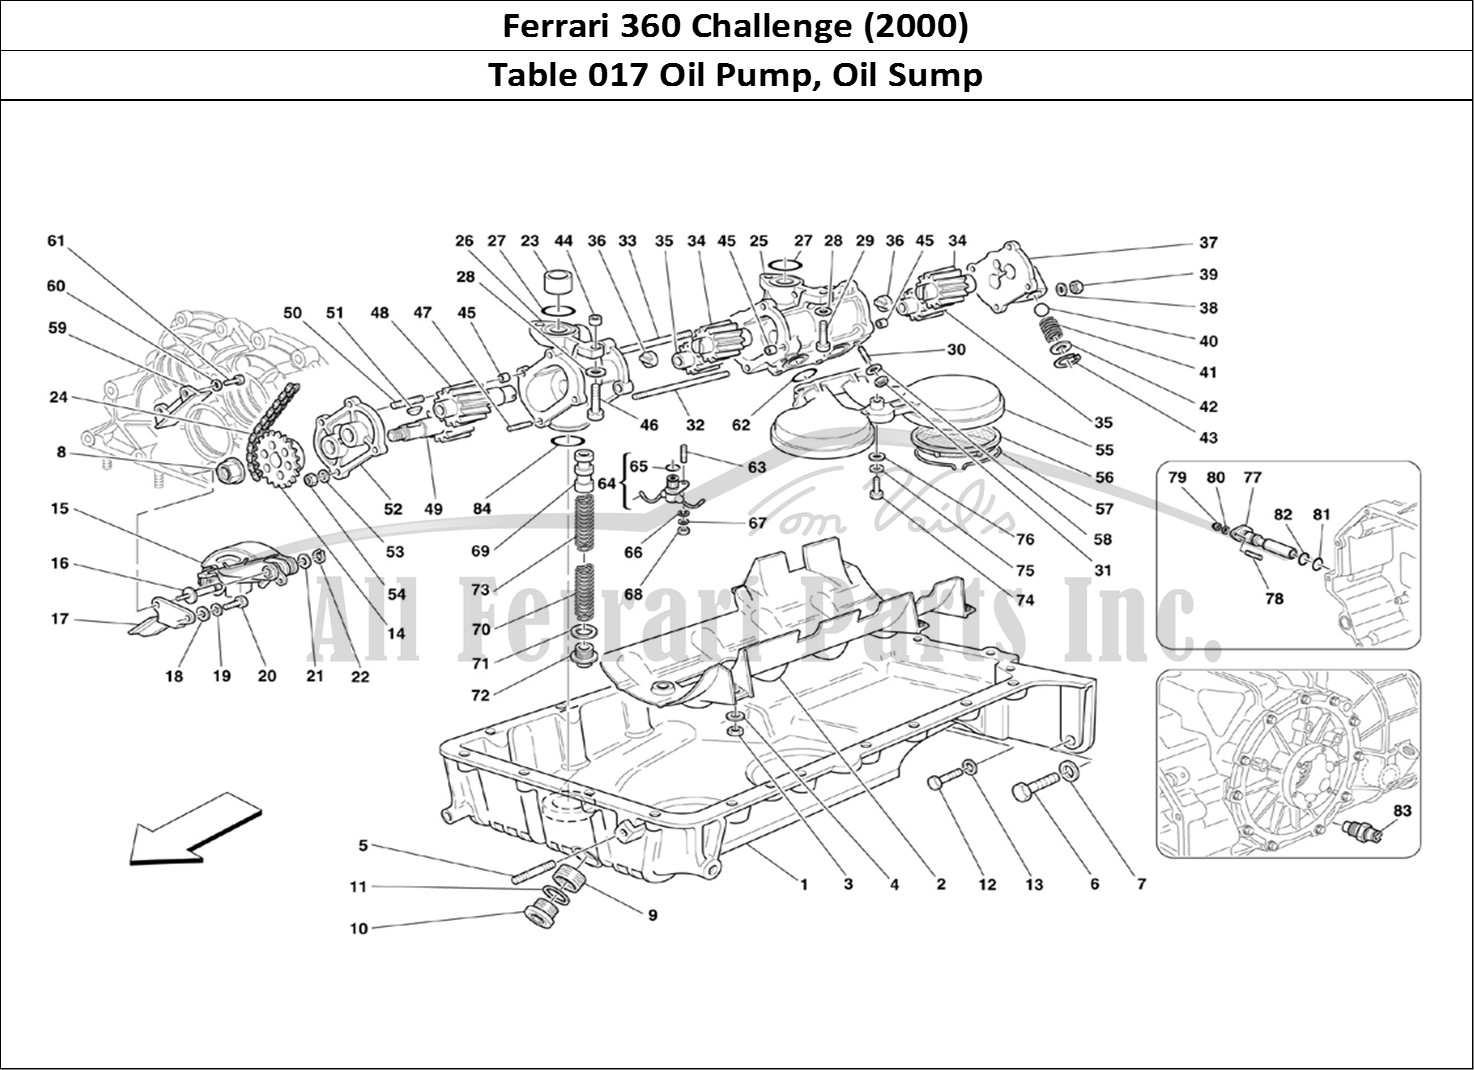 Ferrari Parts Ferrari 360 Challenge (2000) Page 017 Pumps and Oil Sump